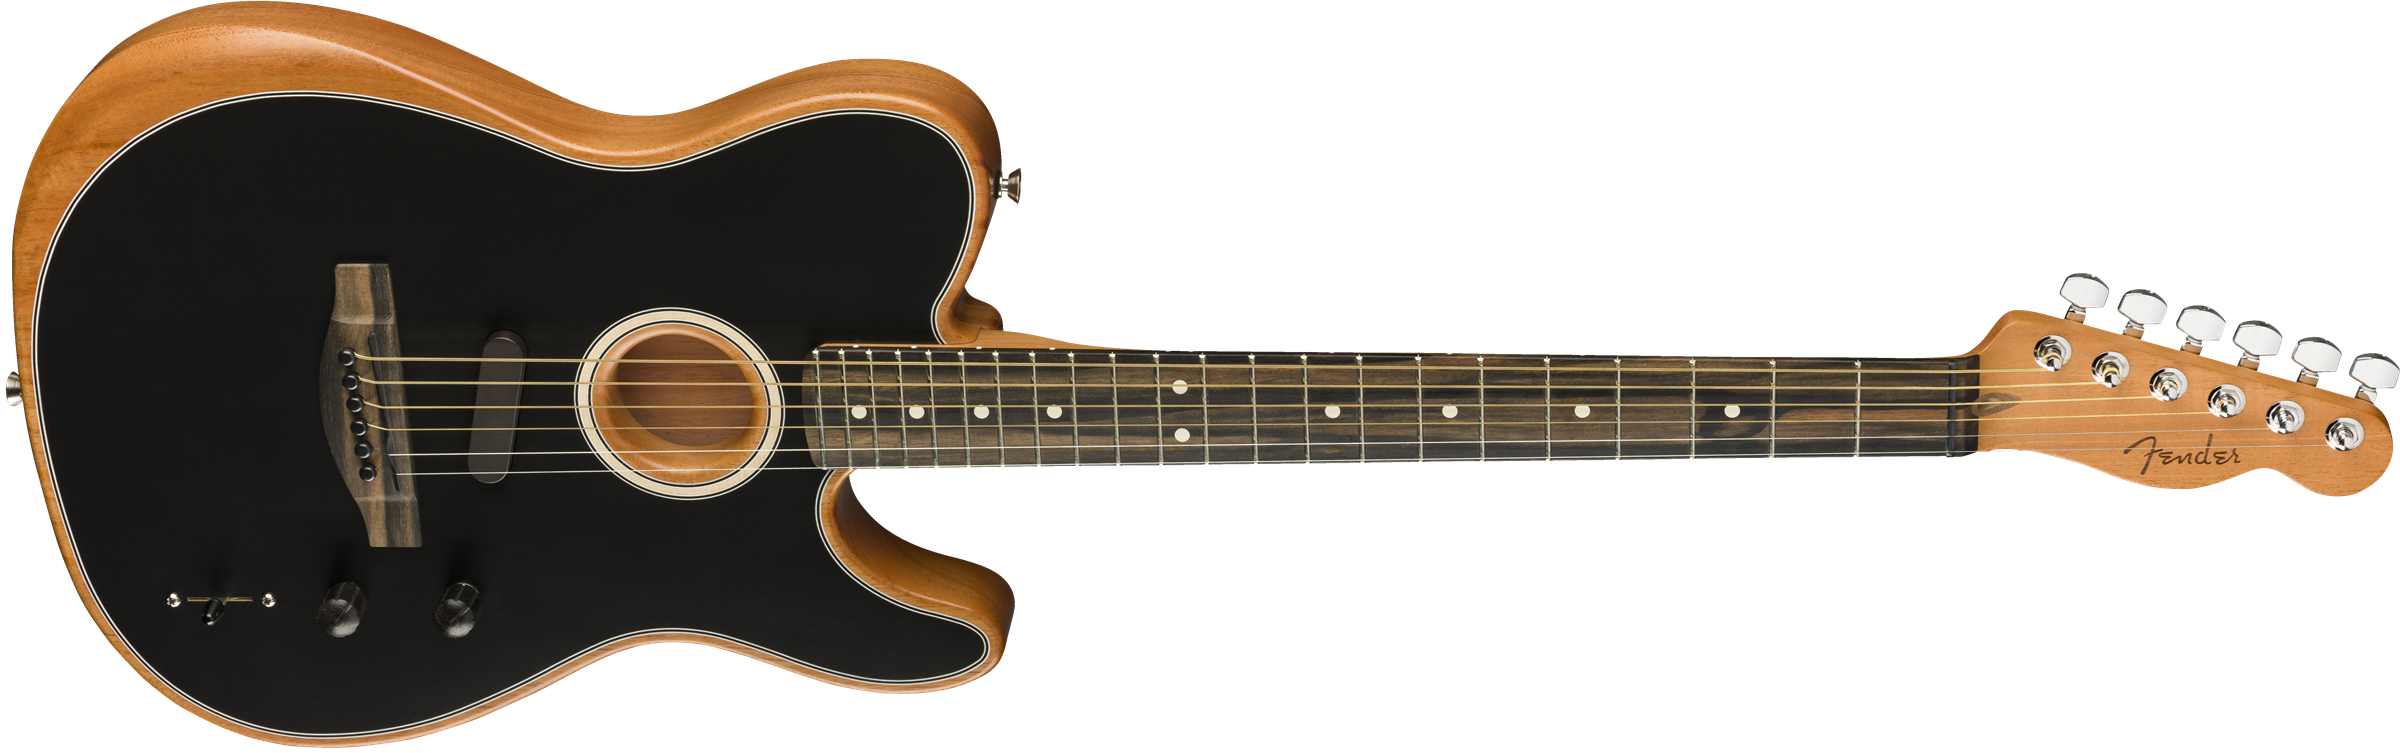 Fender Tele American Acoustasonic Usa Eb - Black - Electro acoustic guitar - Variation 2